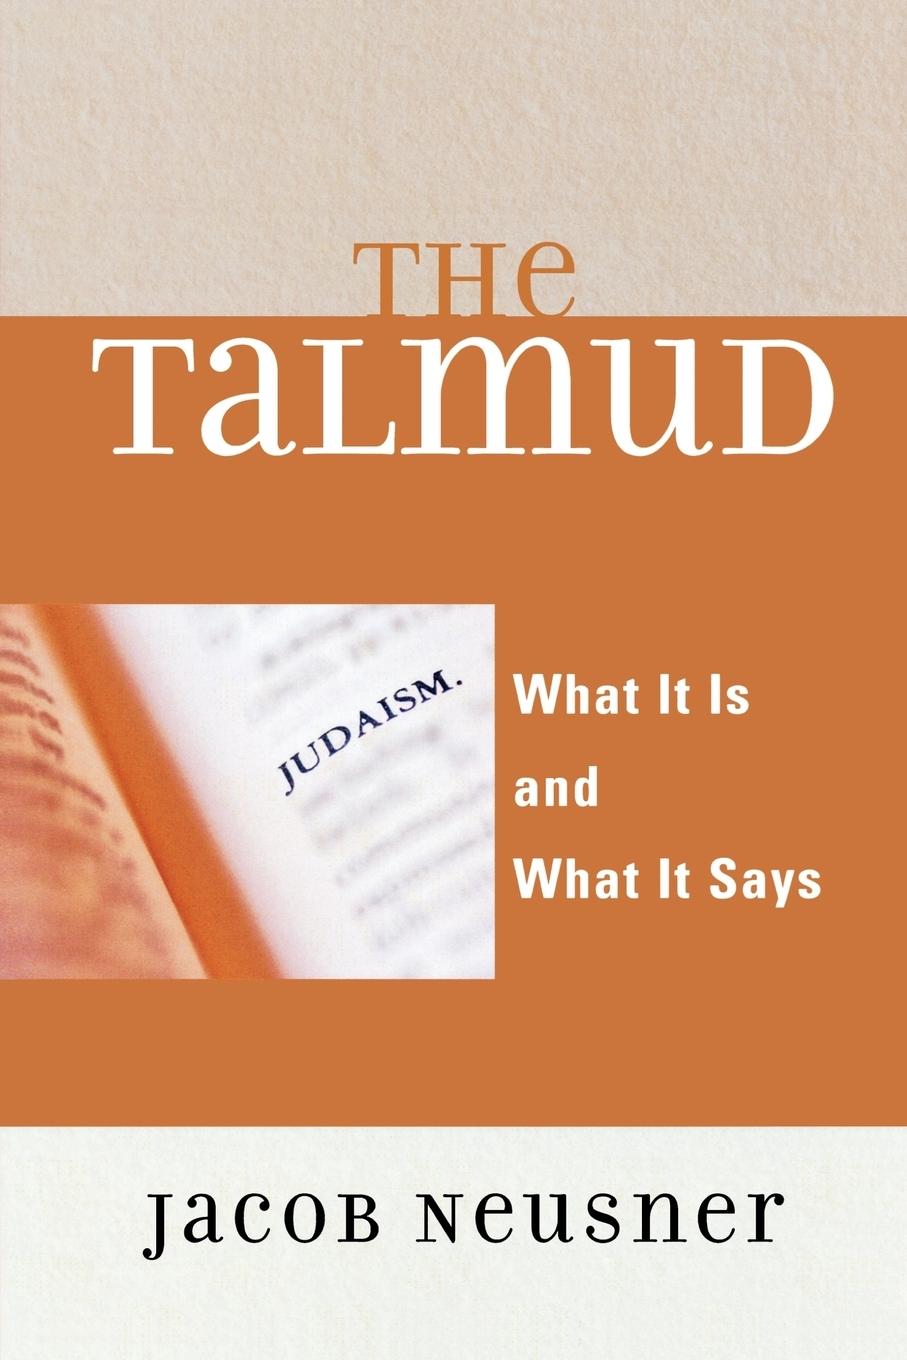 The Talmud - Neusner, Jacob